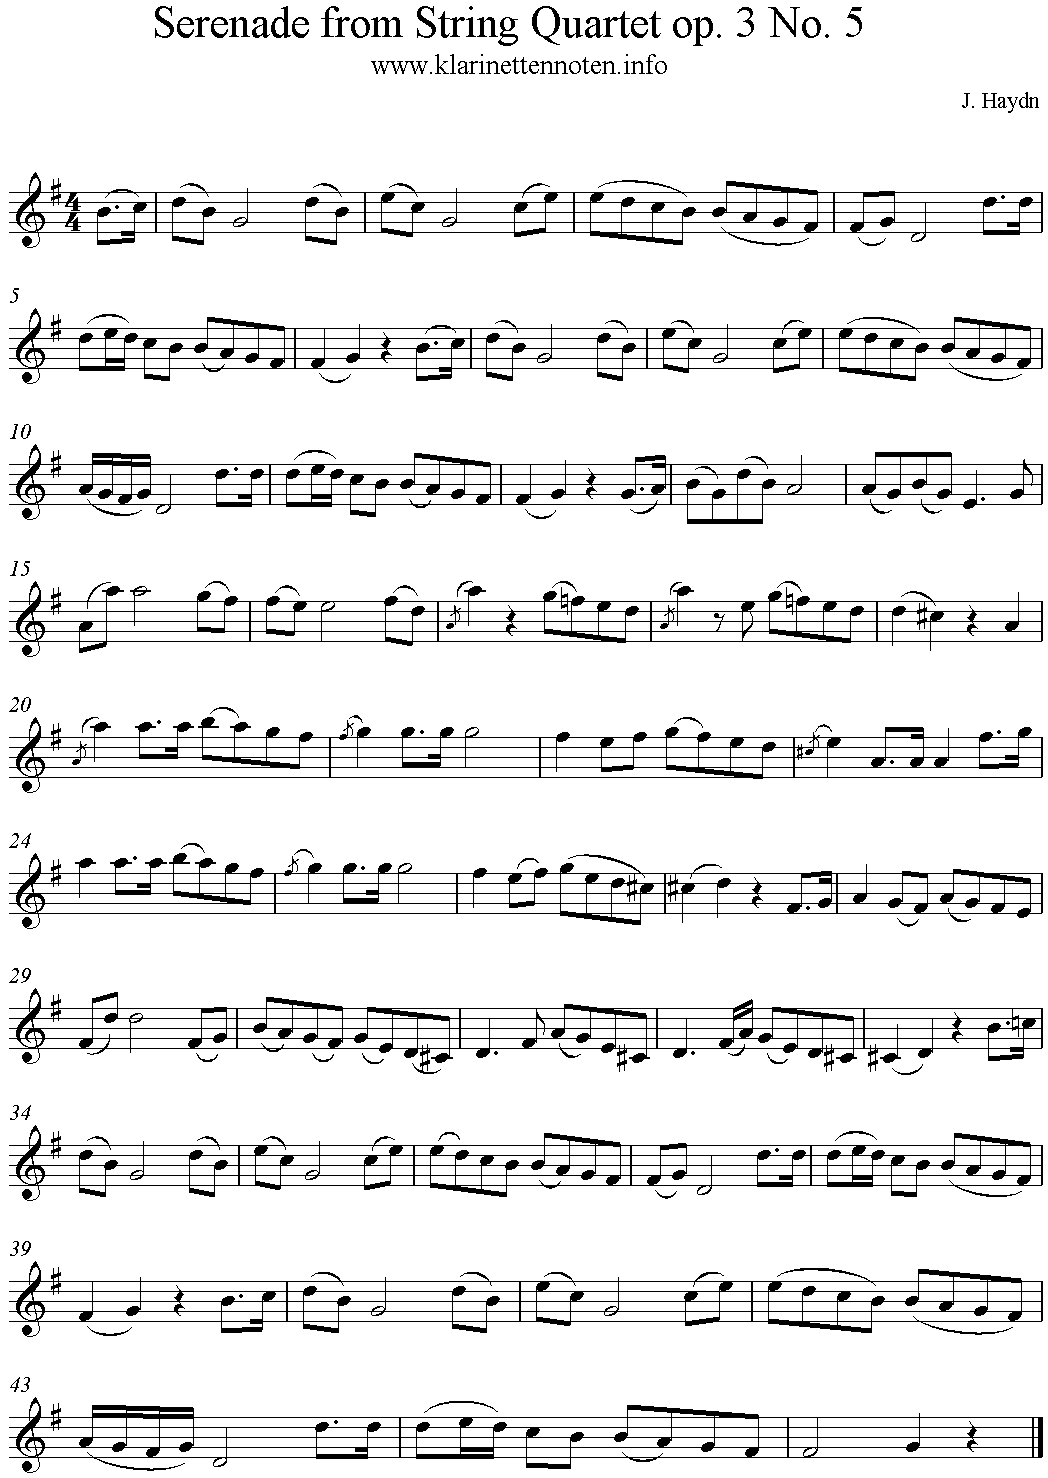 Andante - Serenade  from Stringquartet op. 3 No 5 , Haydn